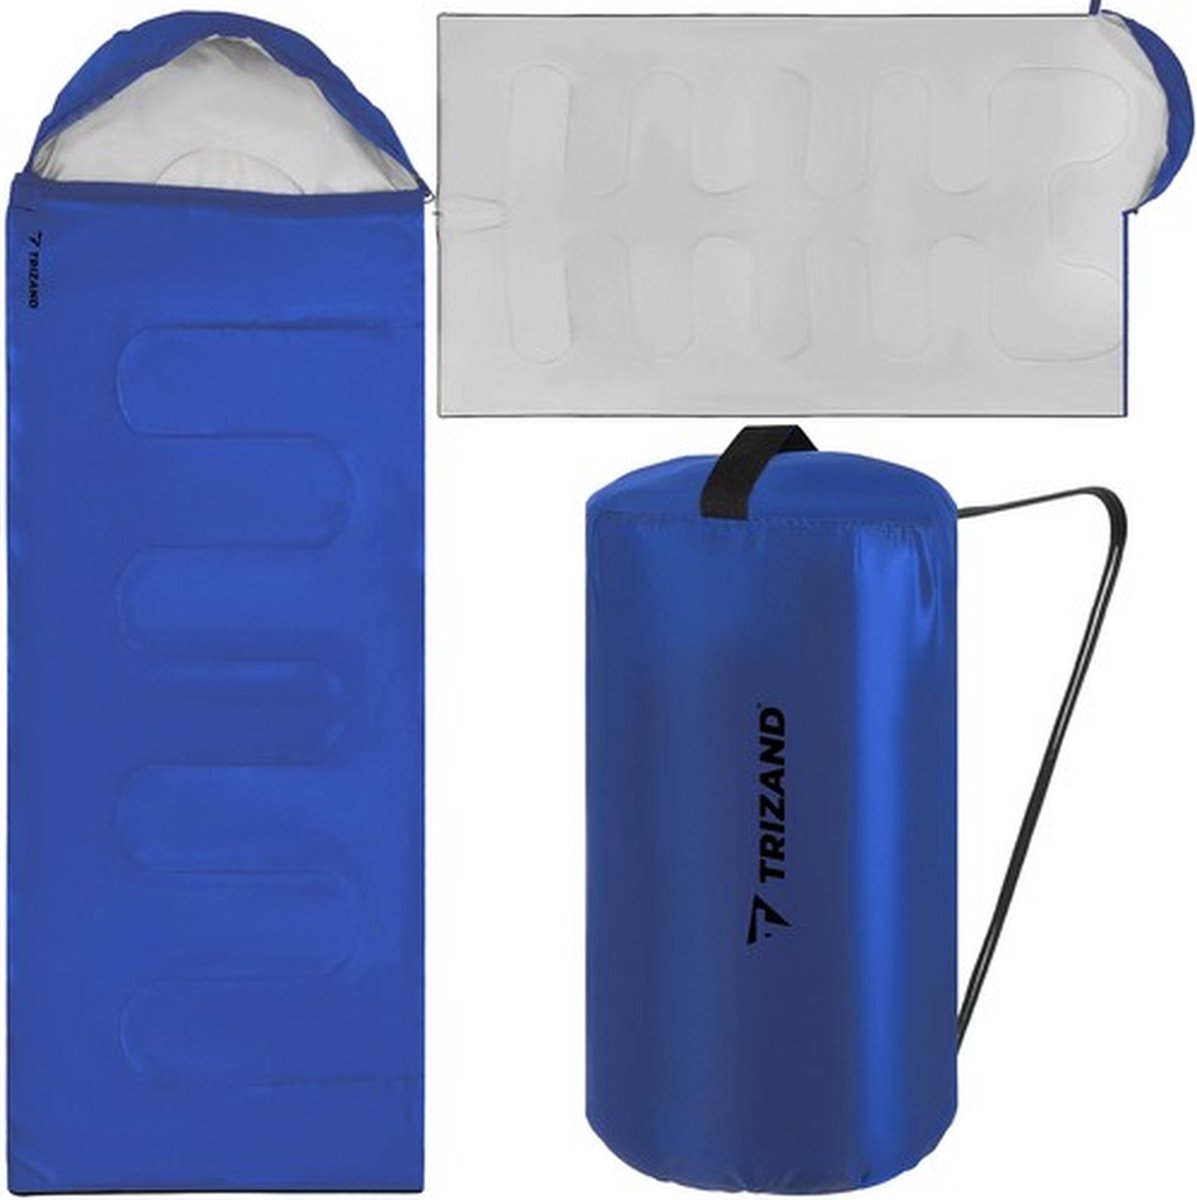 Trizand Slaapzak - blauw S10249 | Sleeping Bag